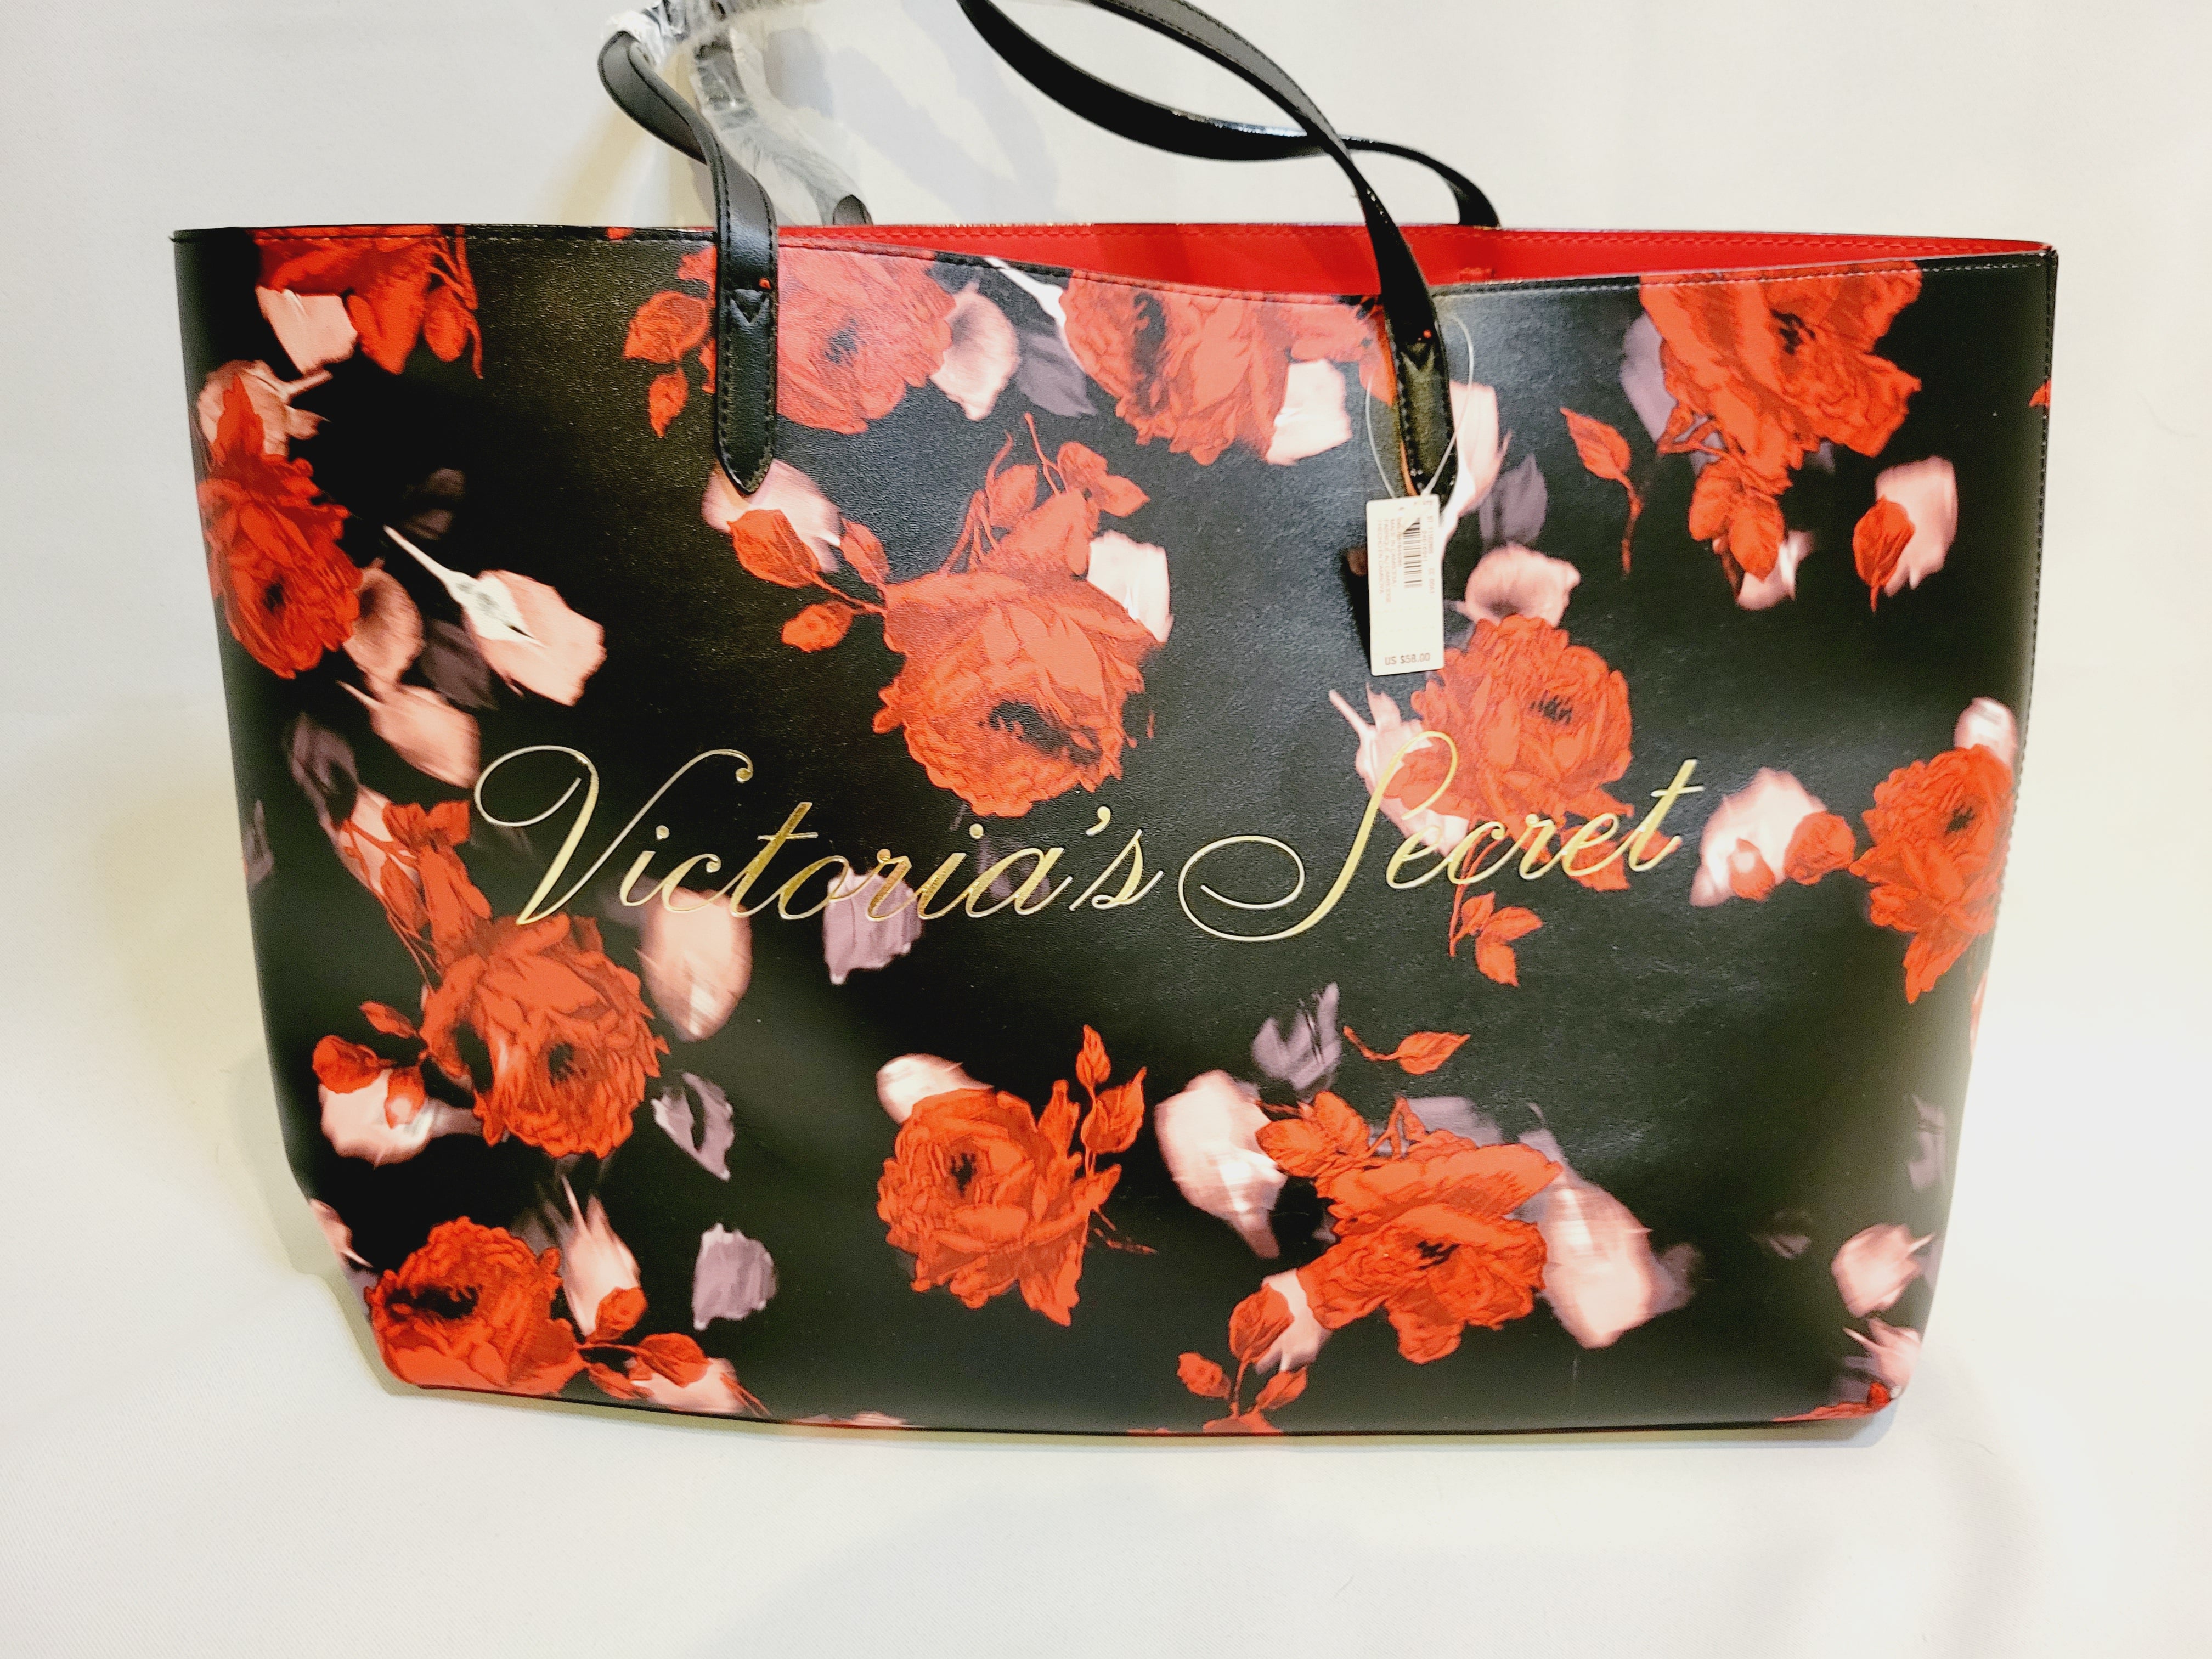 Victoria's Secret Love Victoria Tote Bag Black wit… - Gem